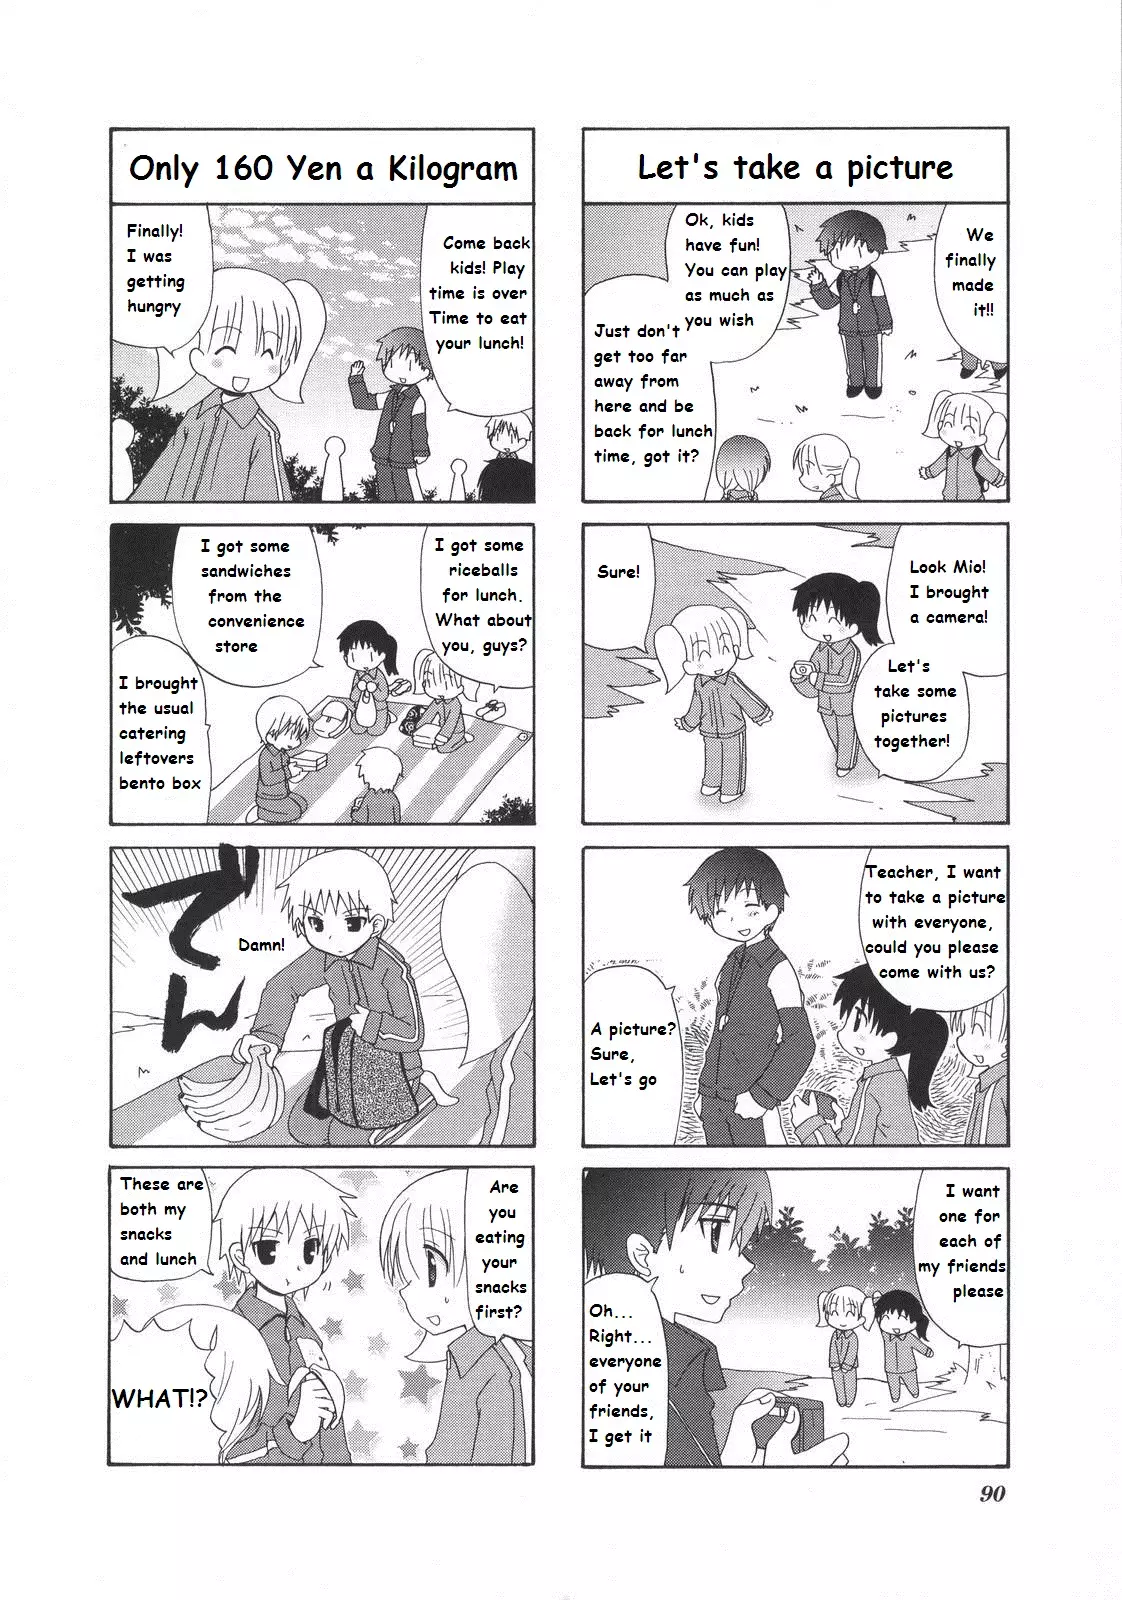 Mio's Diary - 21 page 3-9ac4f6c6